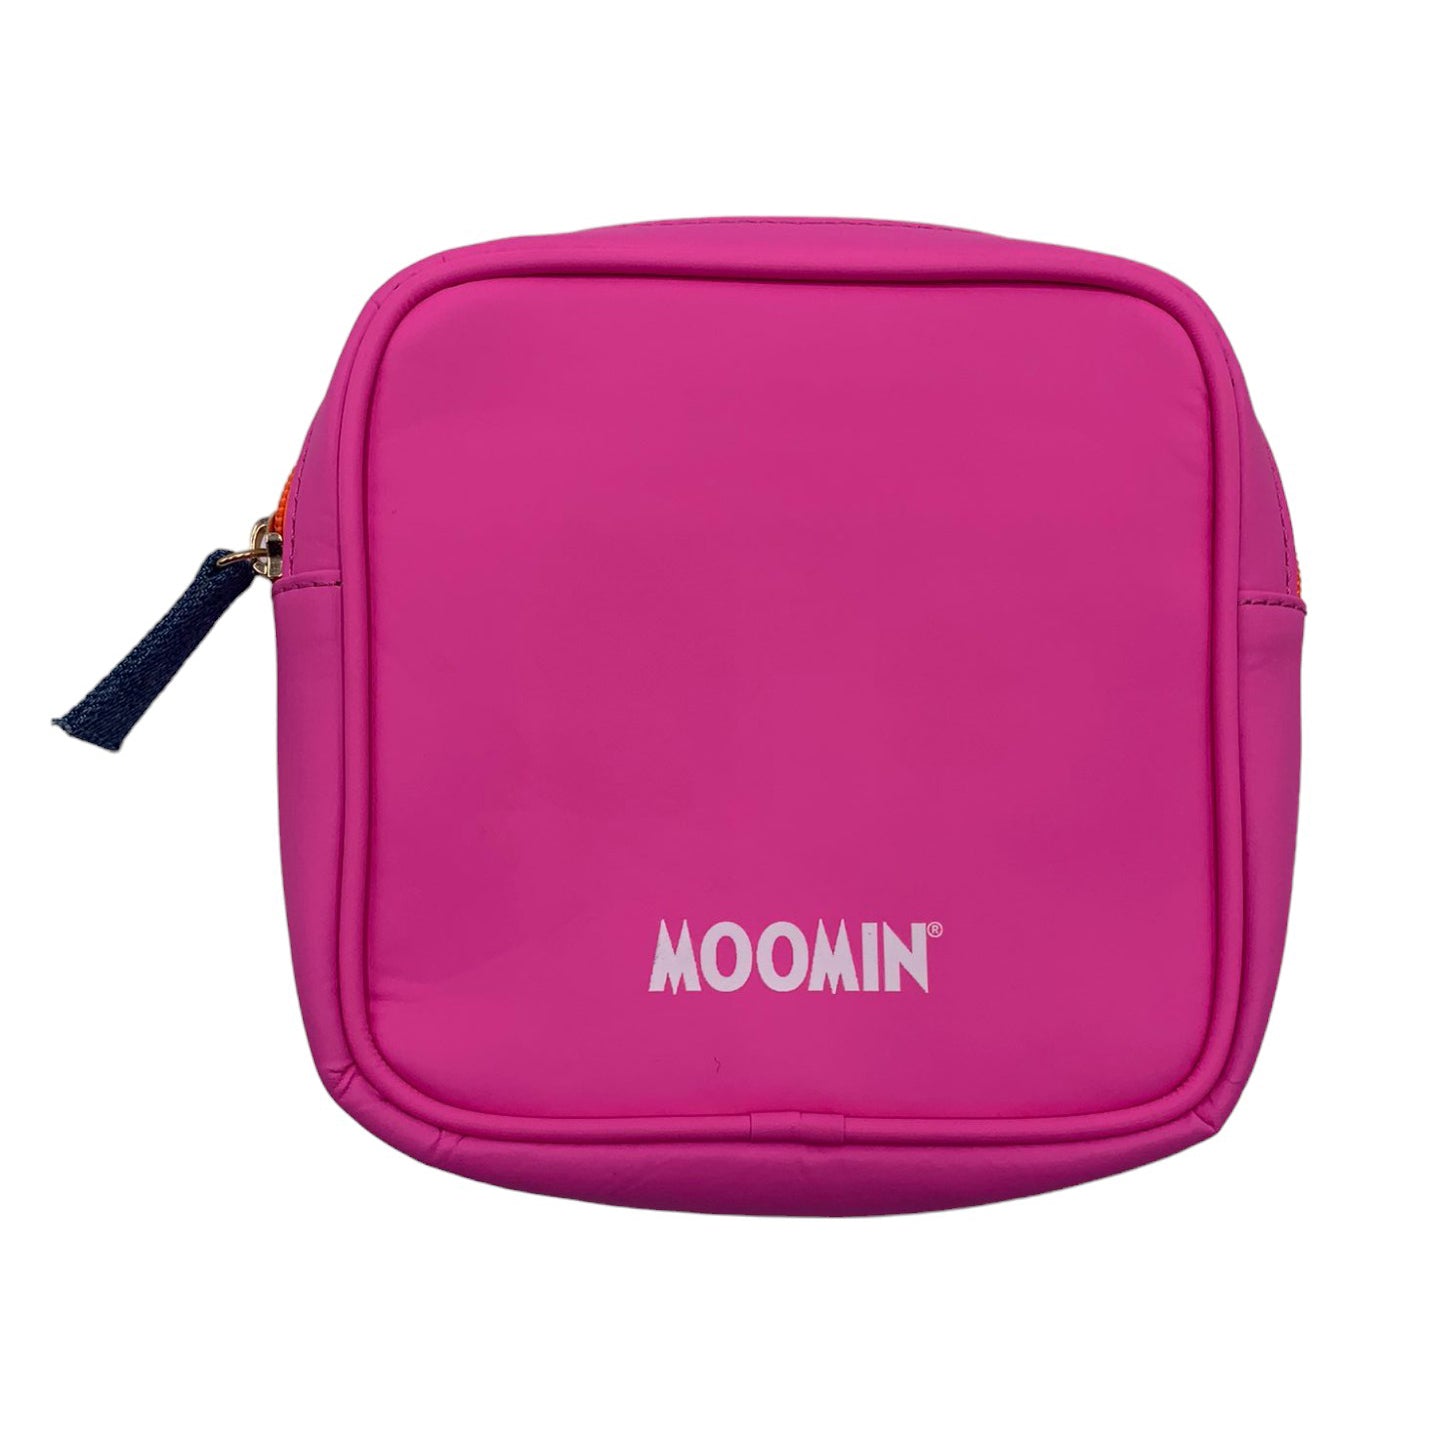 Moomin 'Beautiful' Makeup Bag